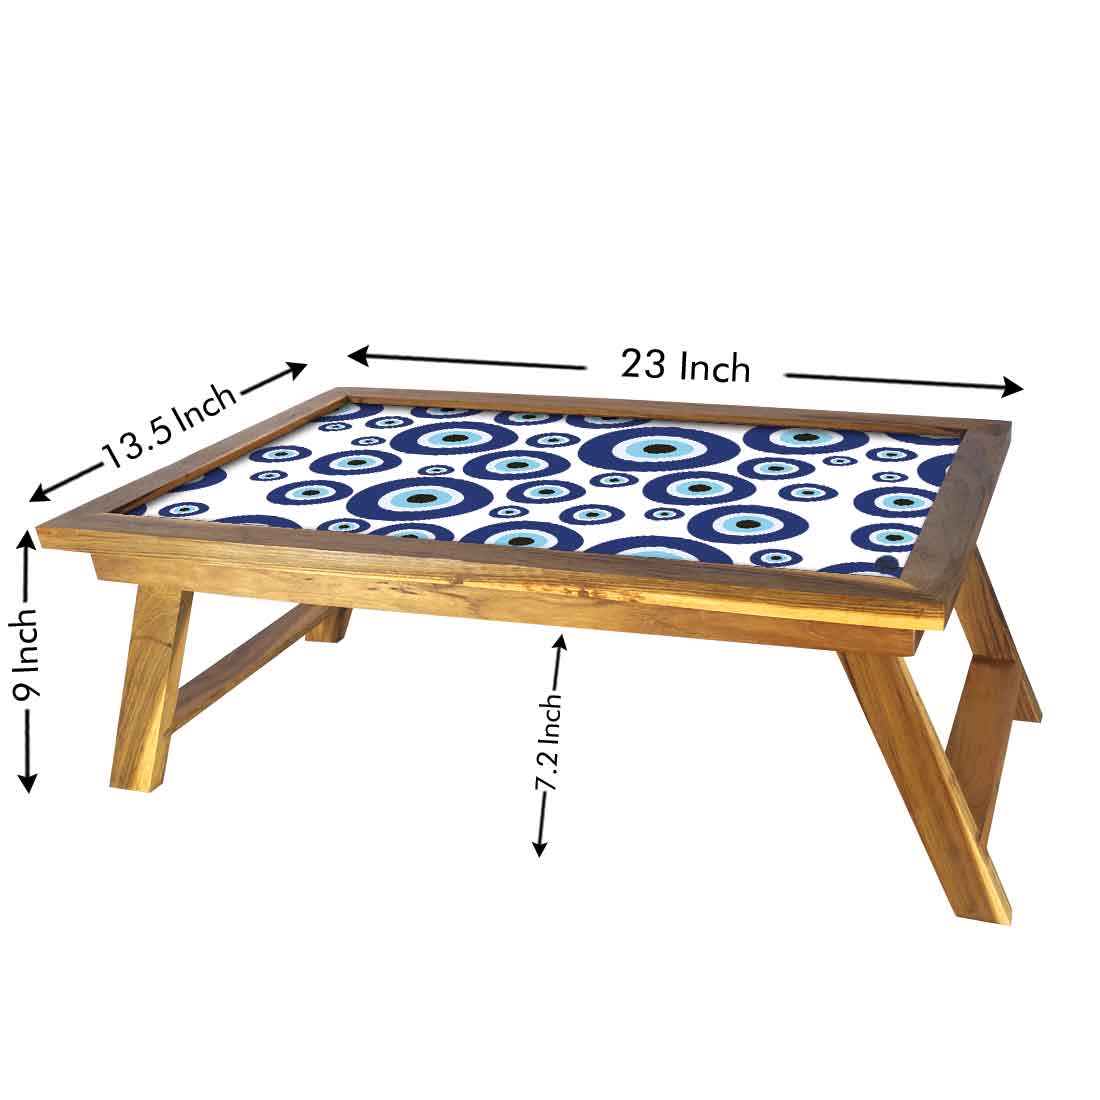 Designer Lapdesk Breakfast Bed Table Foldable Wooden Study Desk - Evil Eye Nutcase